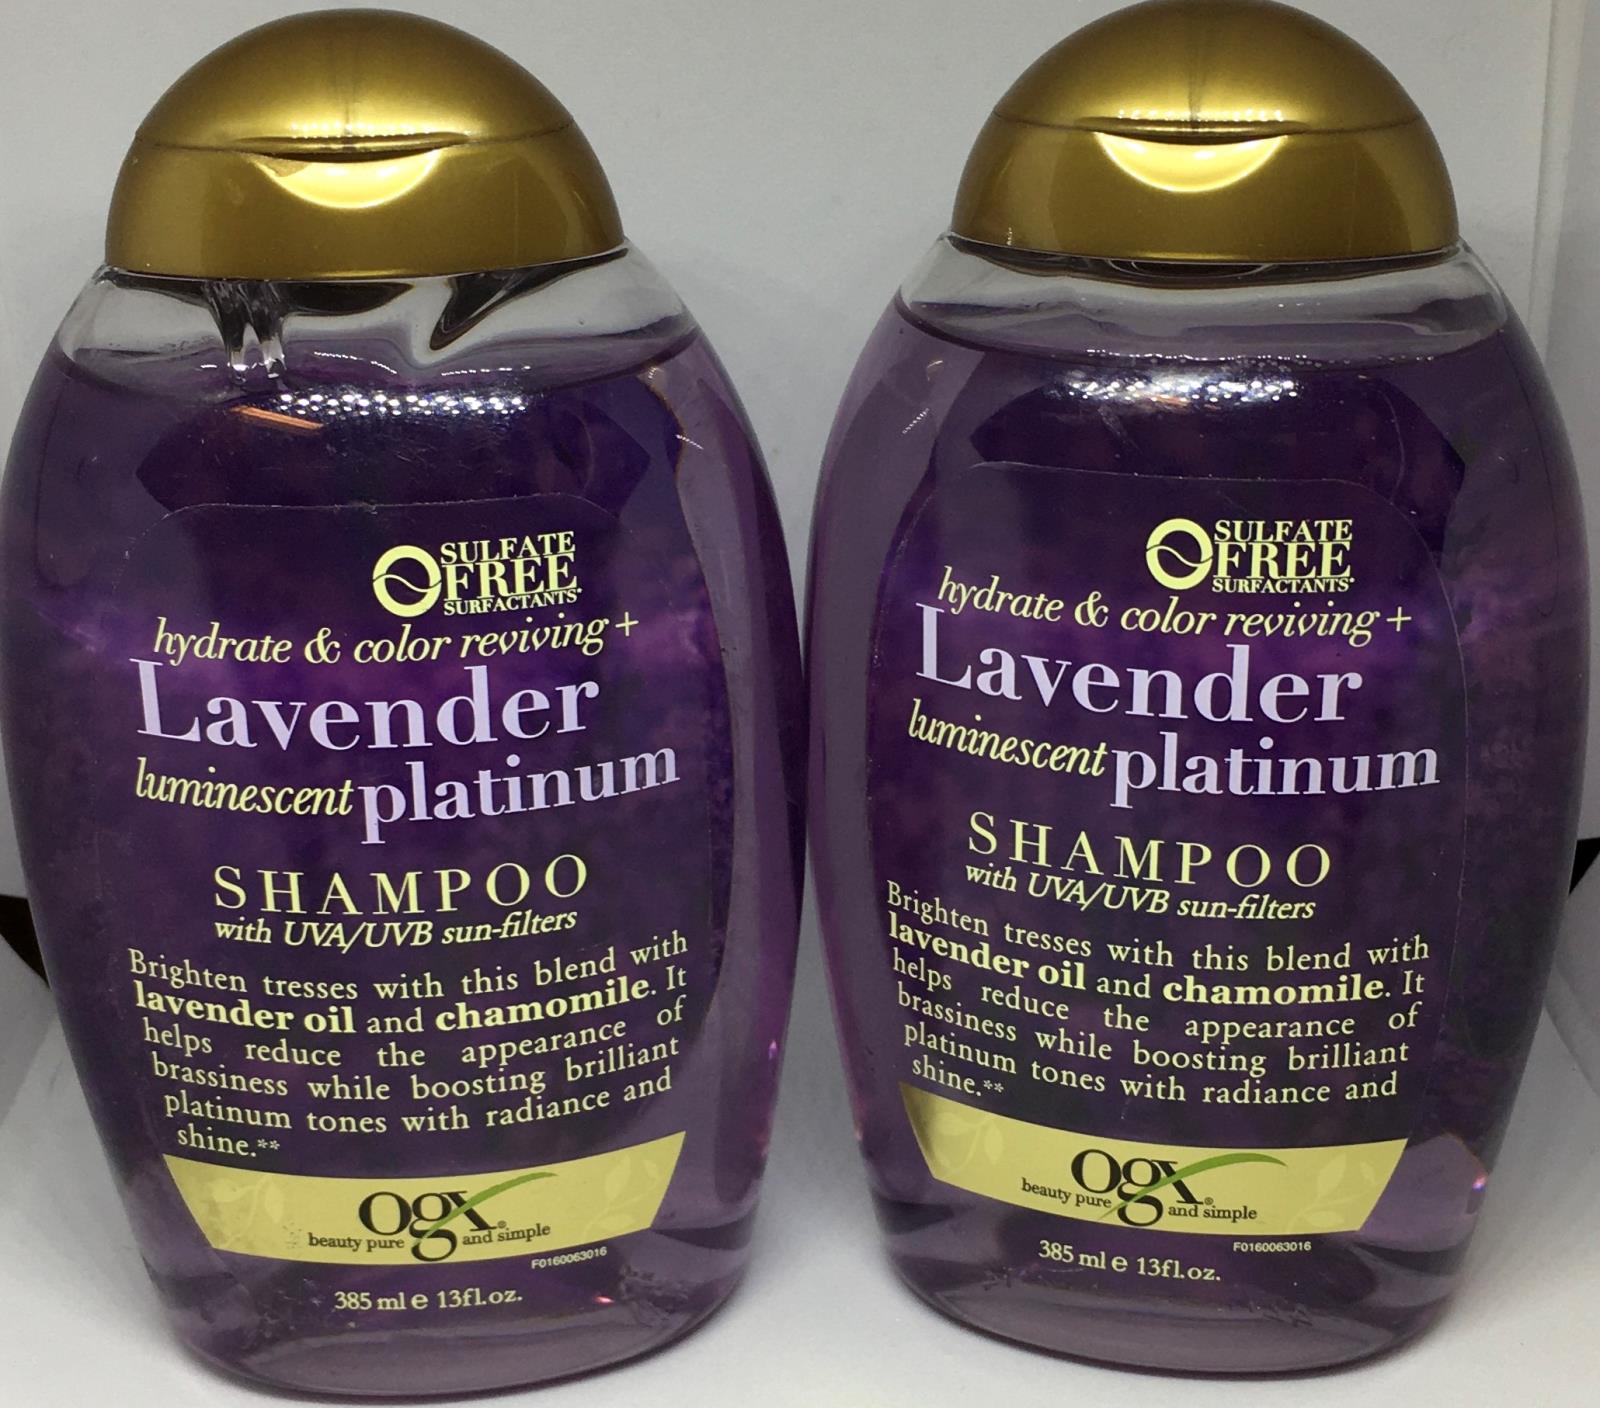 ogx-sulfate-free-lavender-hydrate-color-reviving-platinum-shampoo-lot